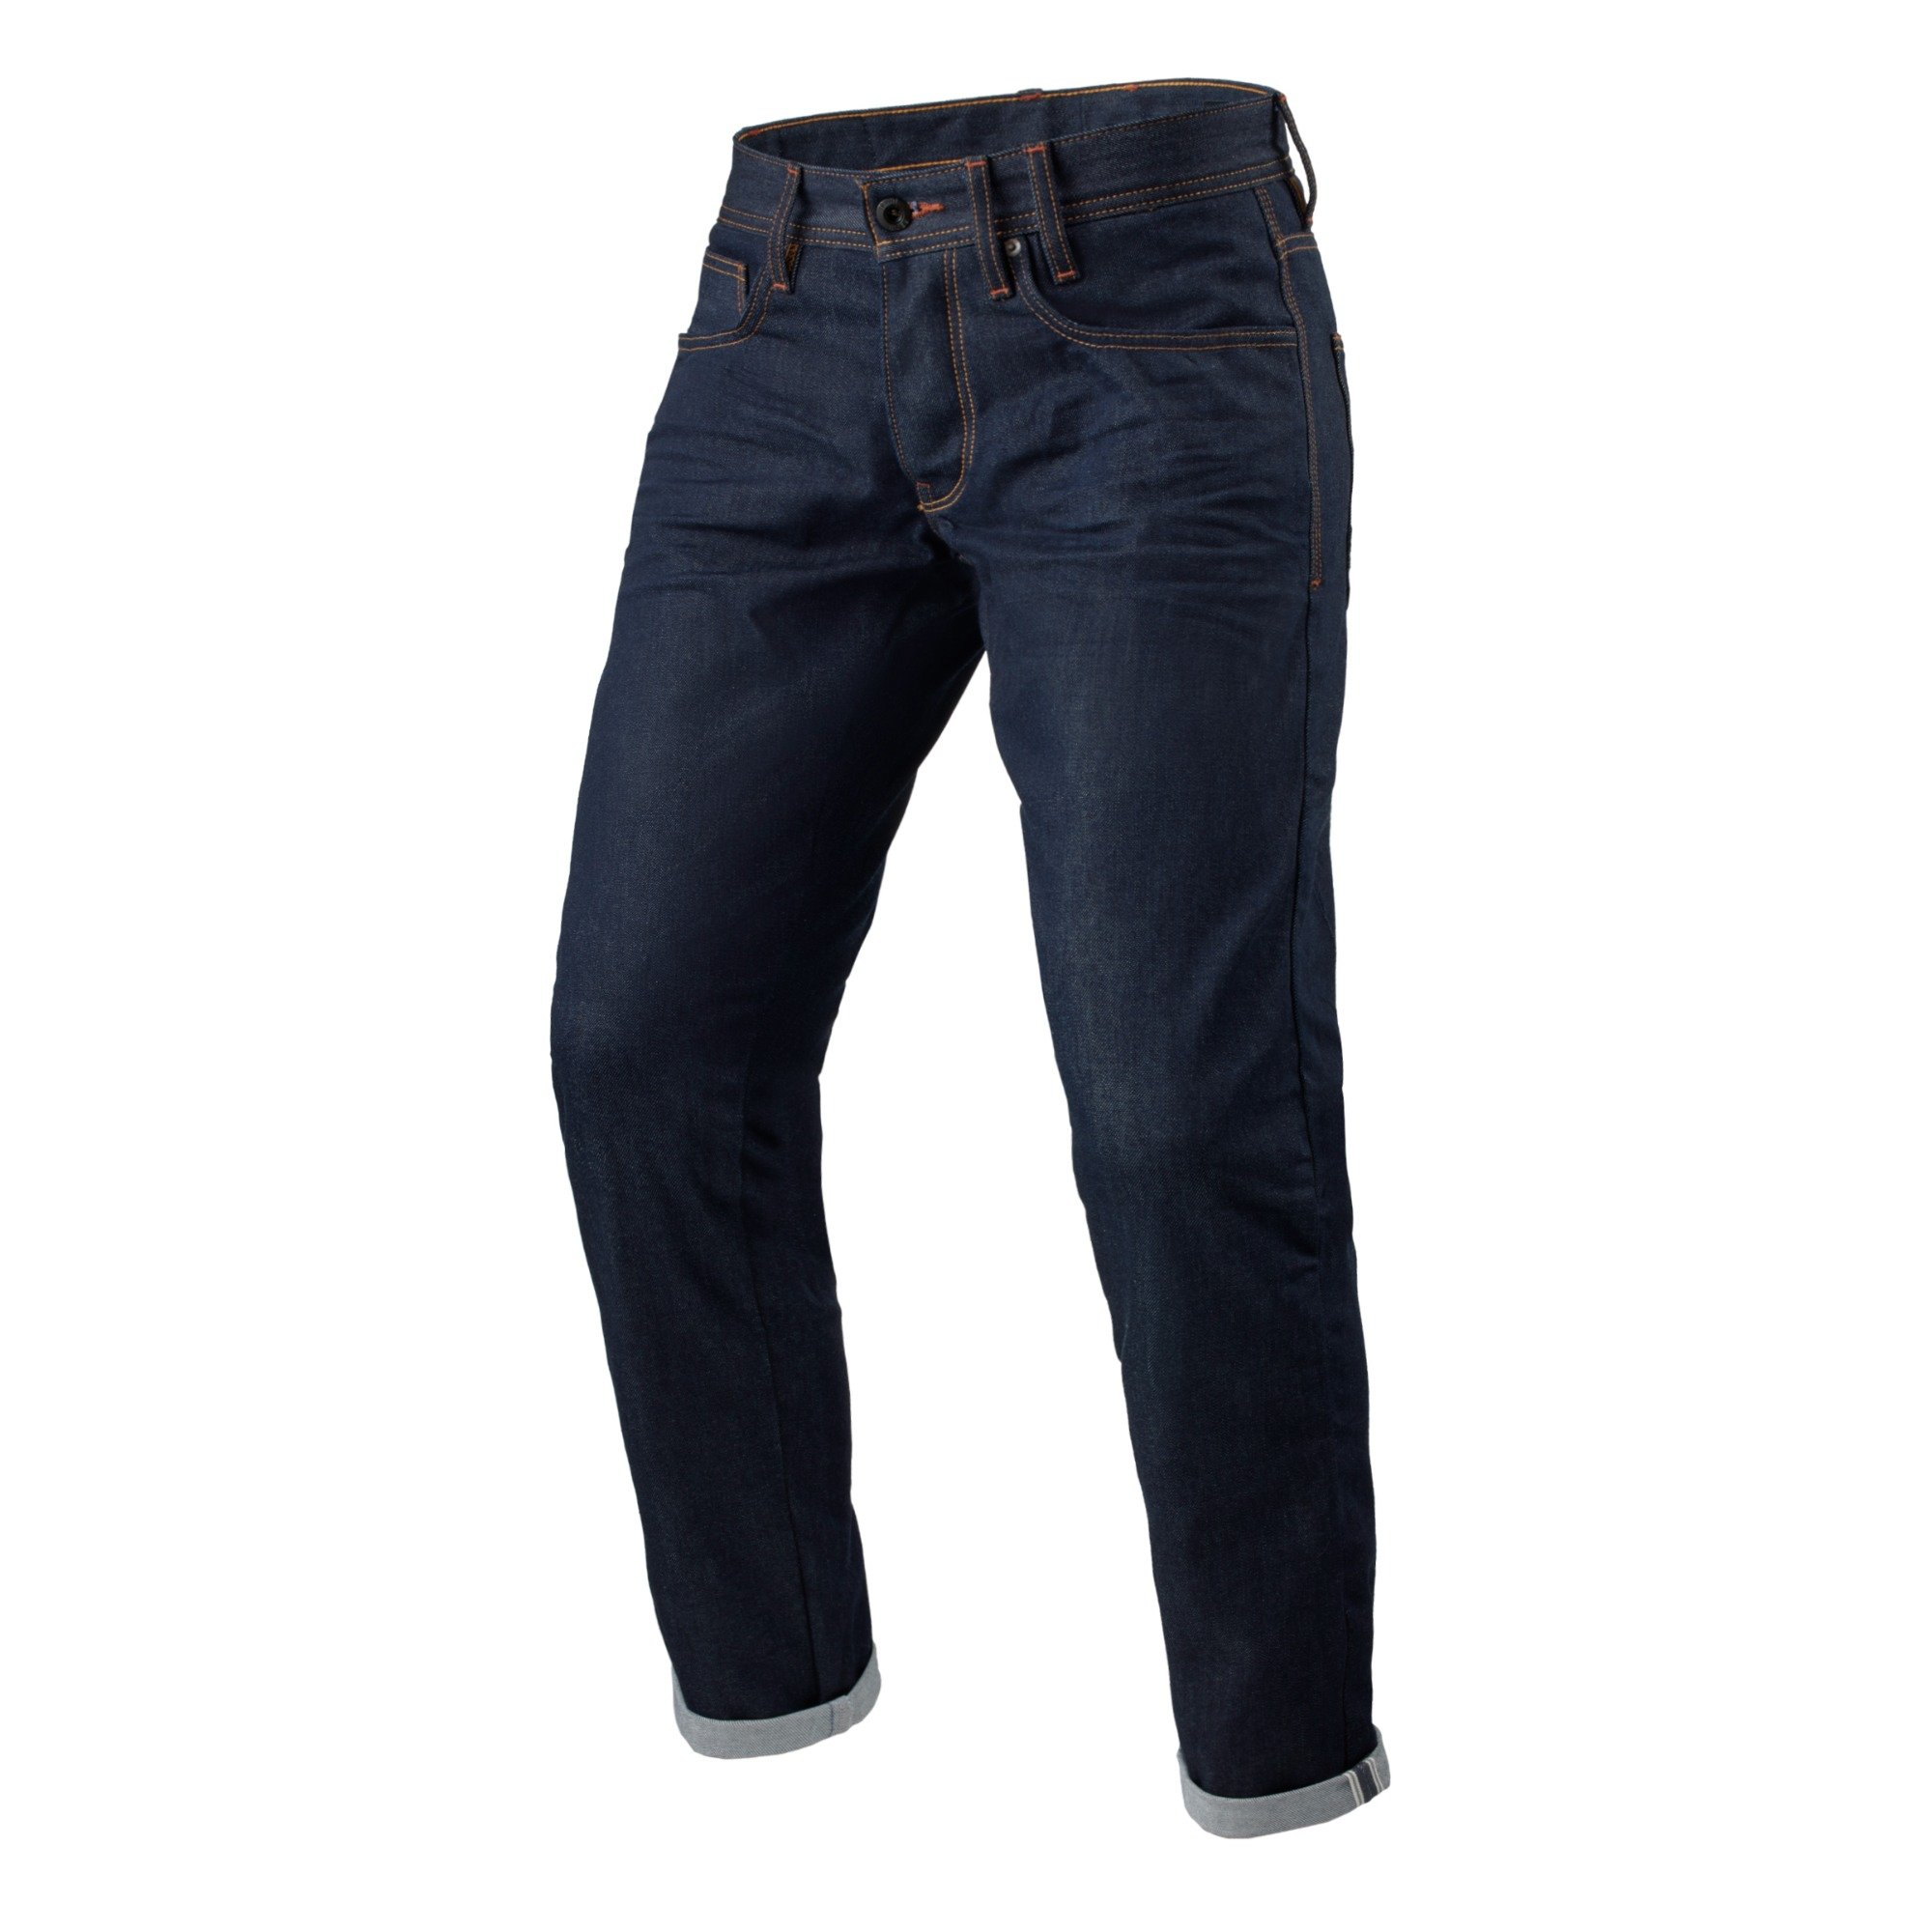 Image of REV'IT! Jeans Lewis Selvedge TF Dark Blue L34 Motorcycle Pants Size L34/W32 EN